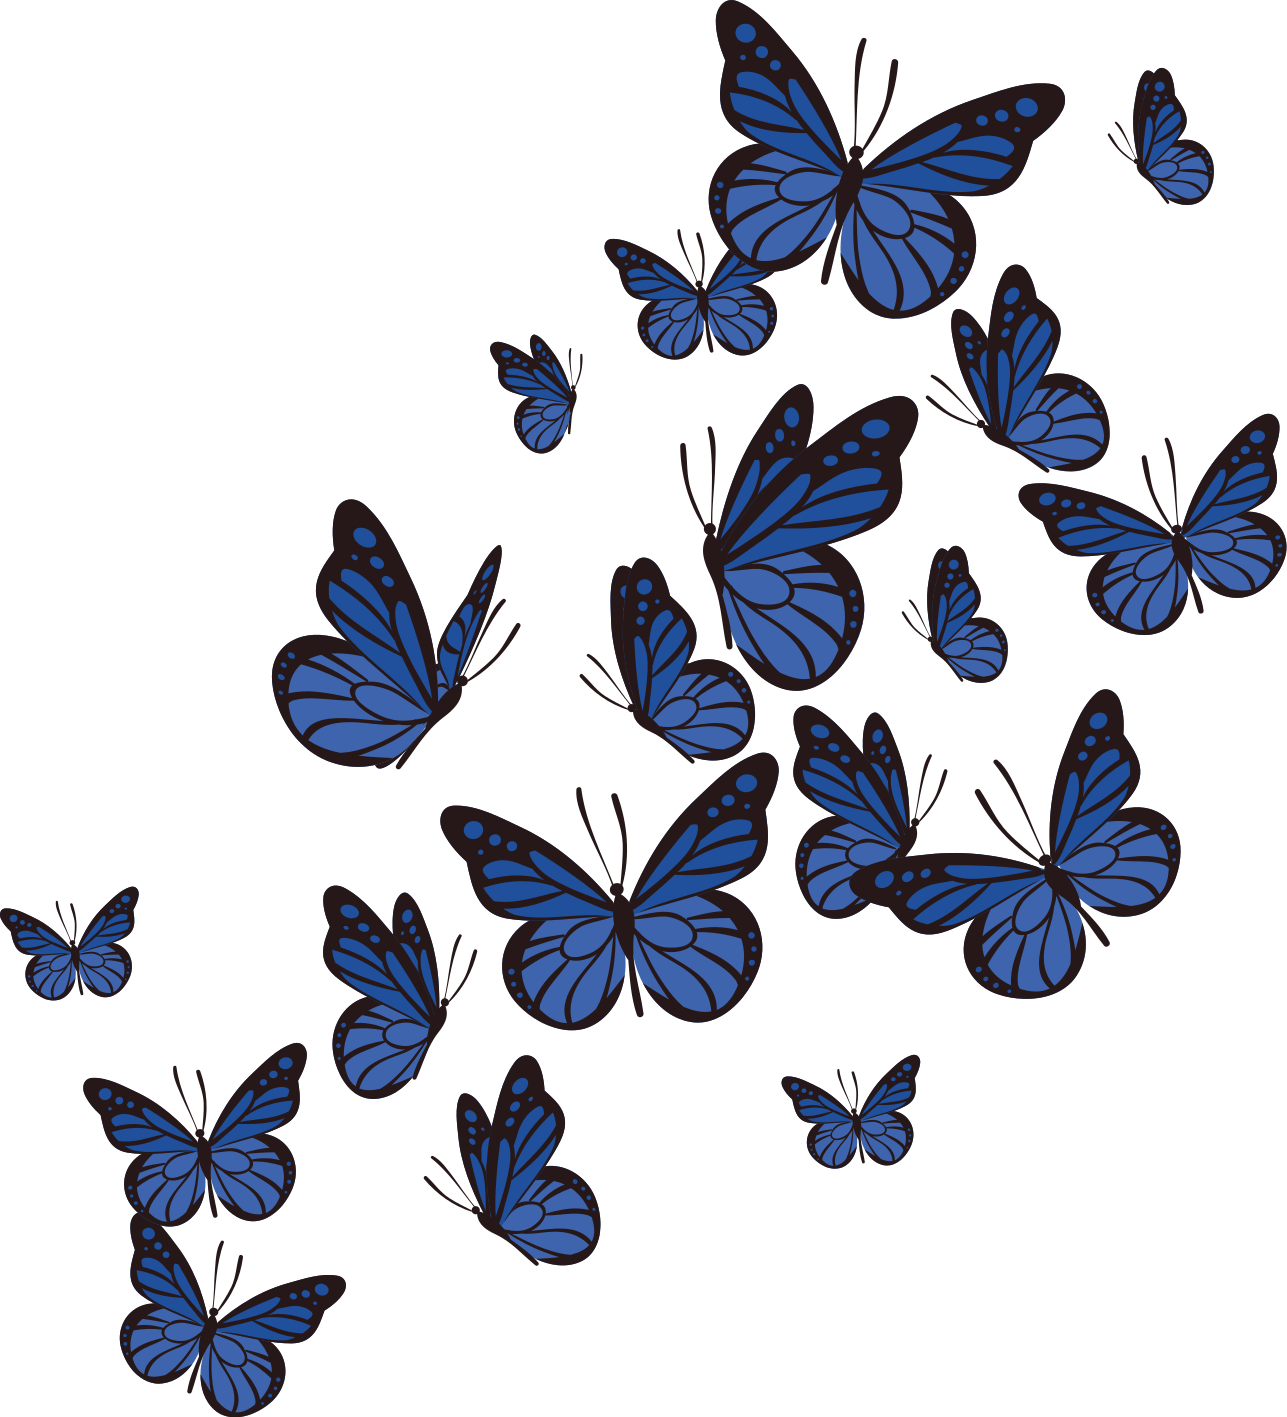 mavi ucan kelebekler vinil cikartmasi tenstickers